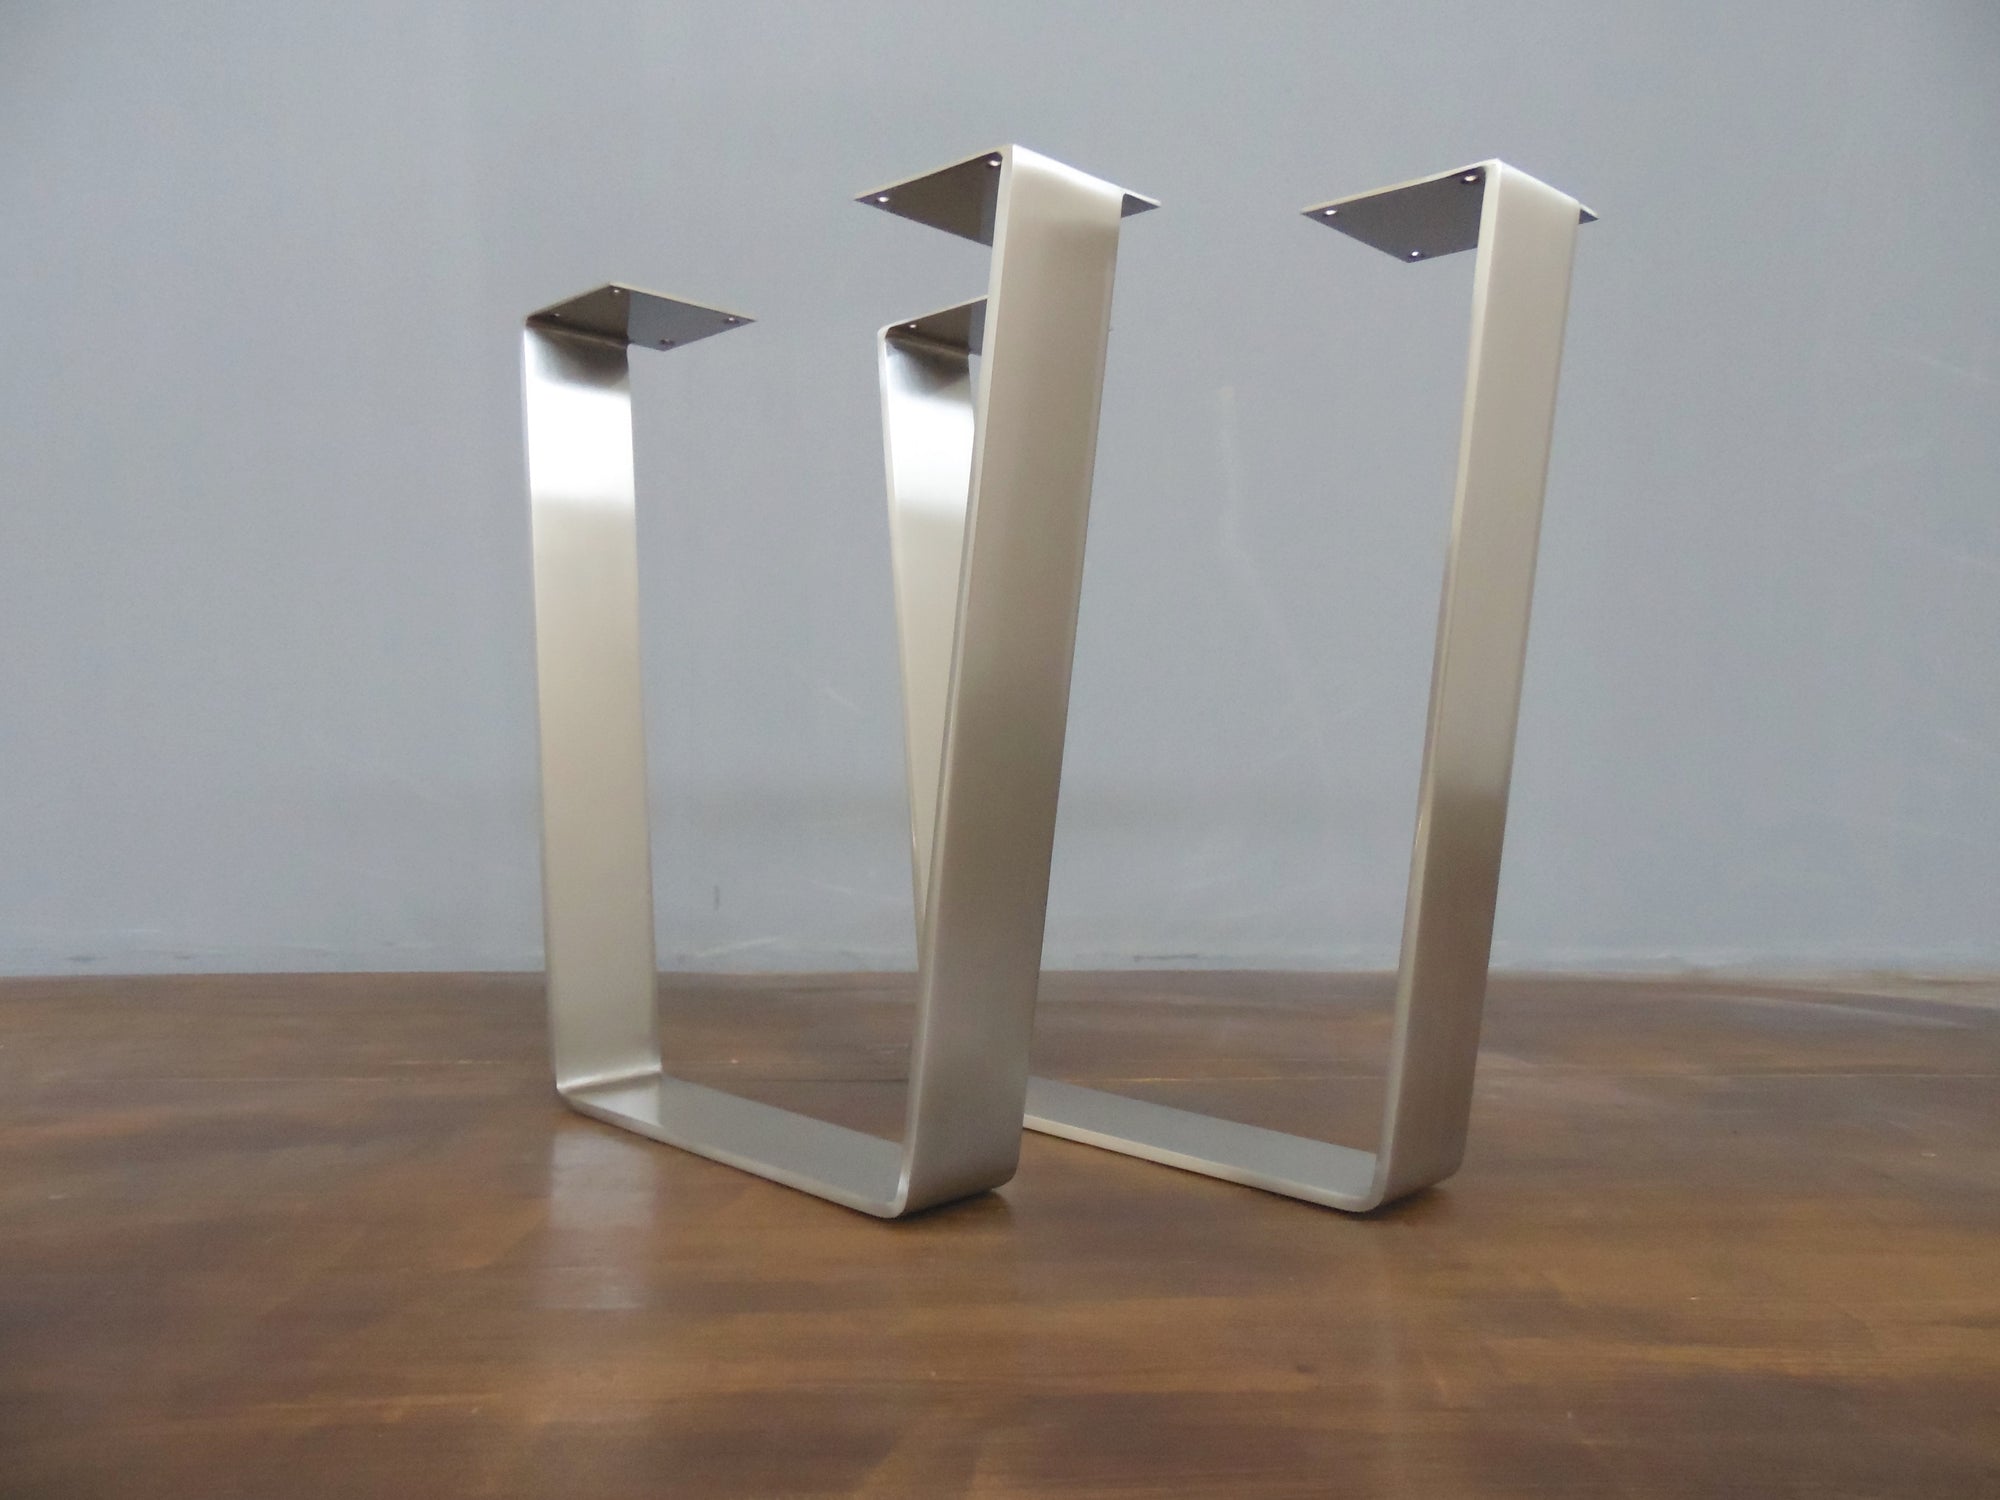 16" Flat Steel Trapezoid Stainless Steel Table Legs